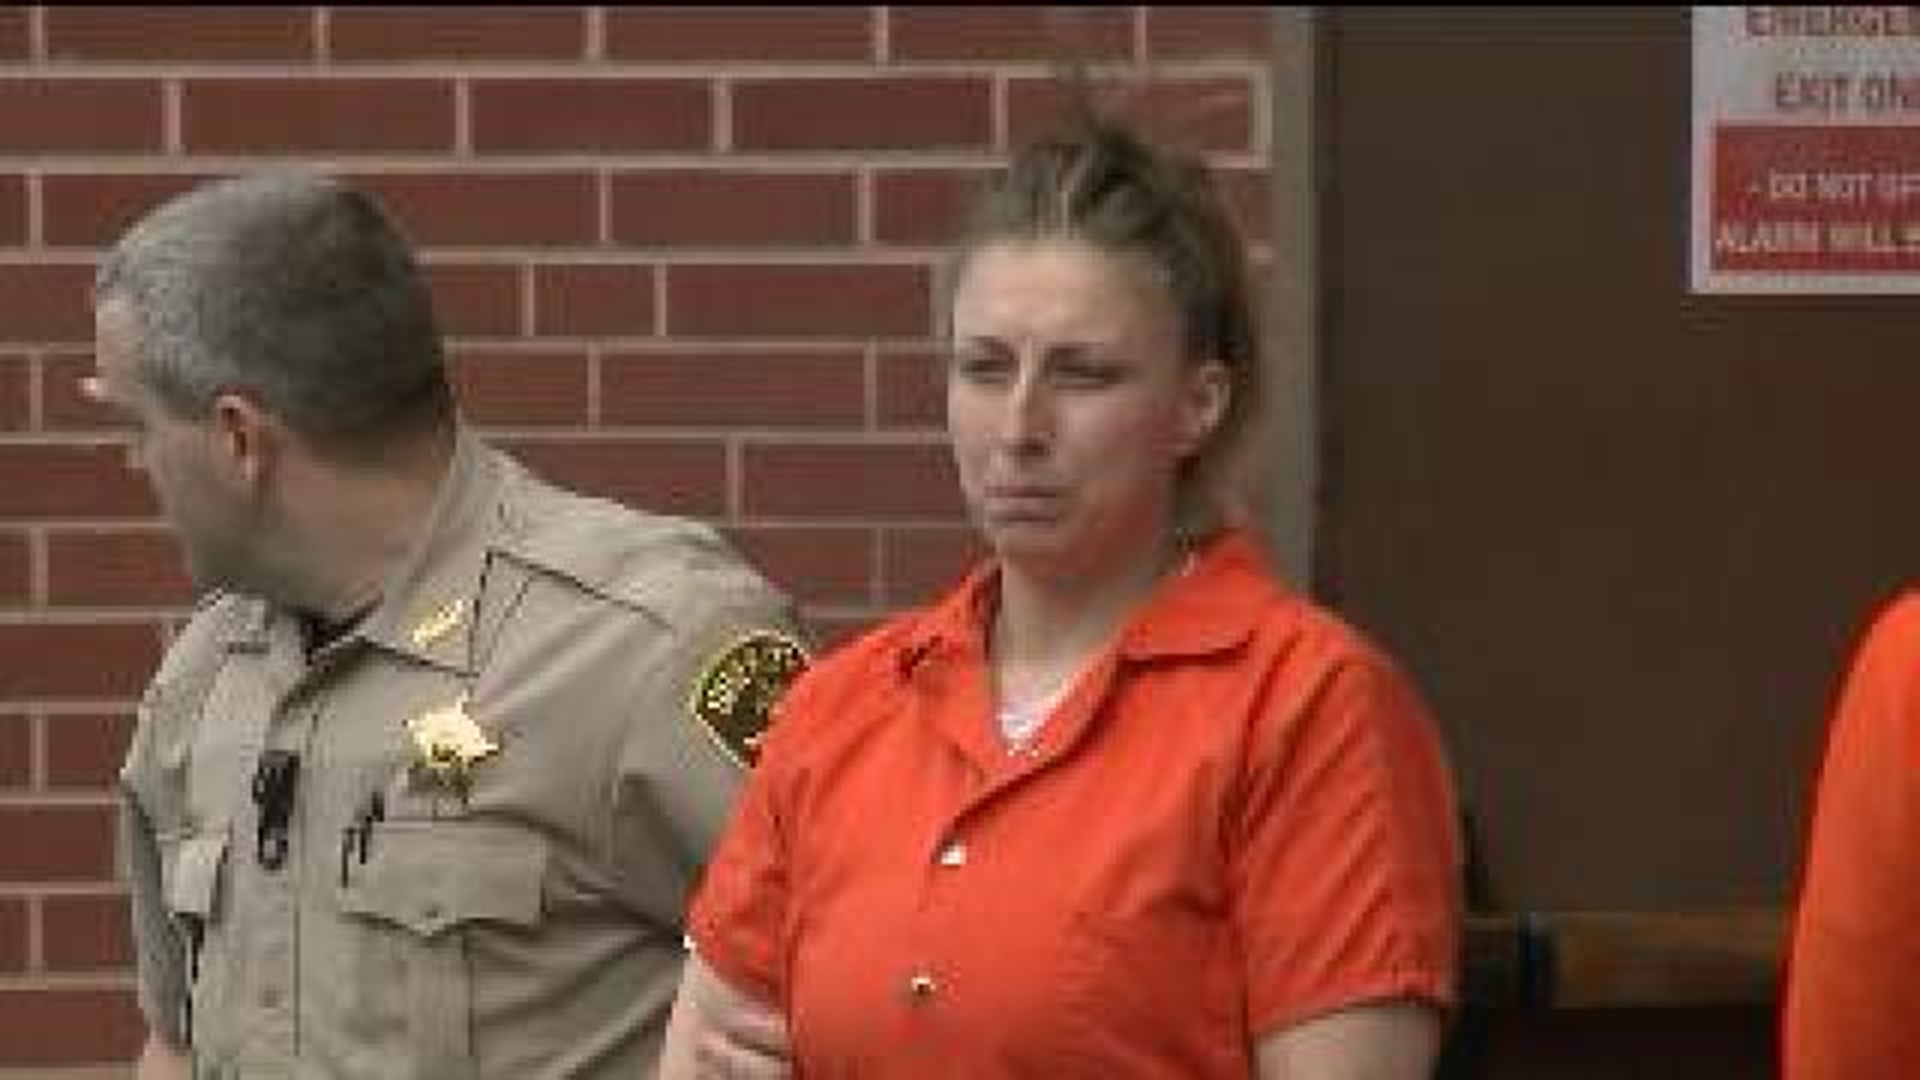 Jennifer Snook Sentenced to 5-15 Years